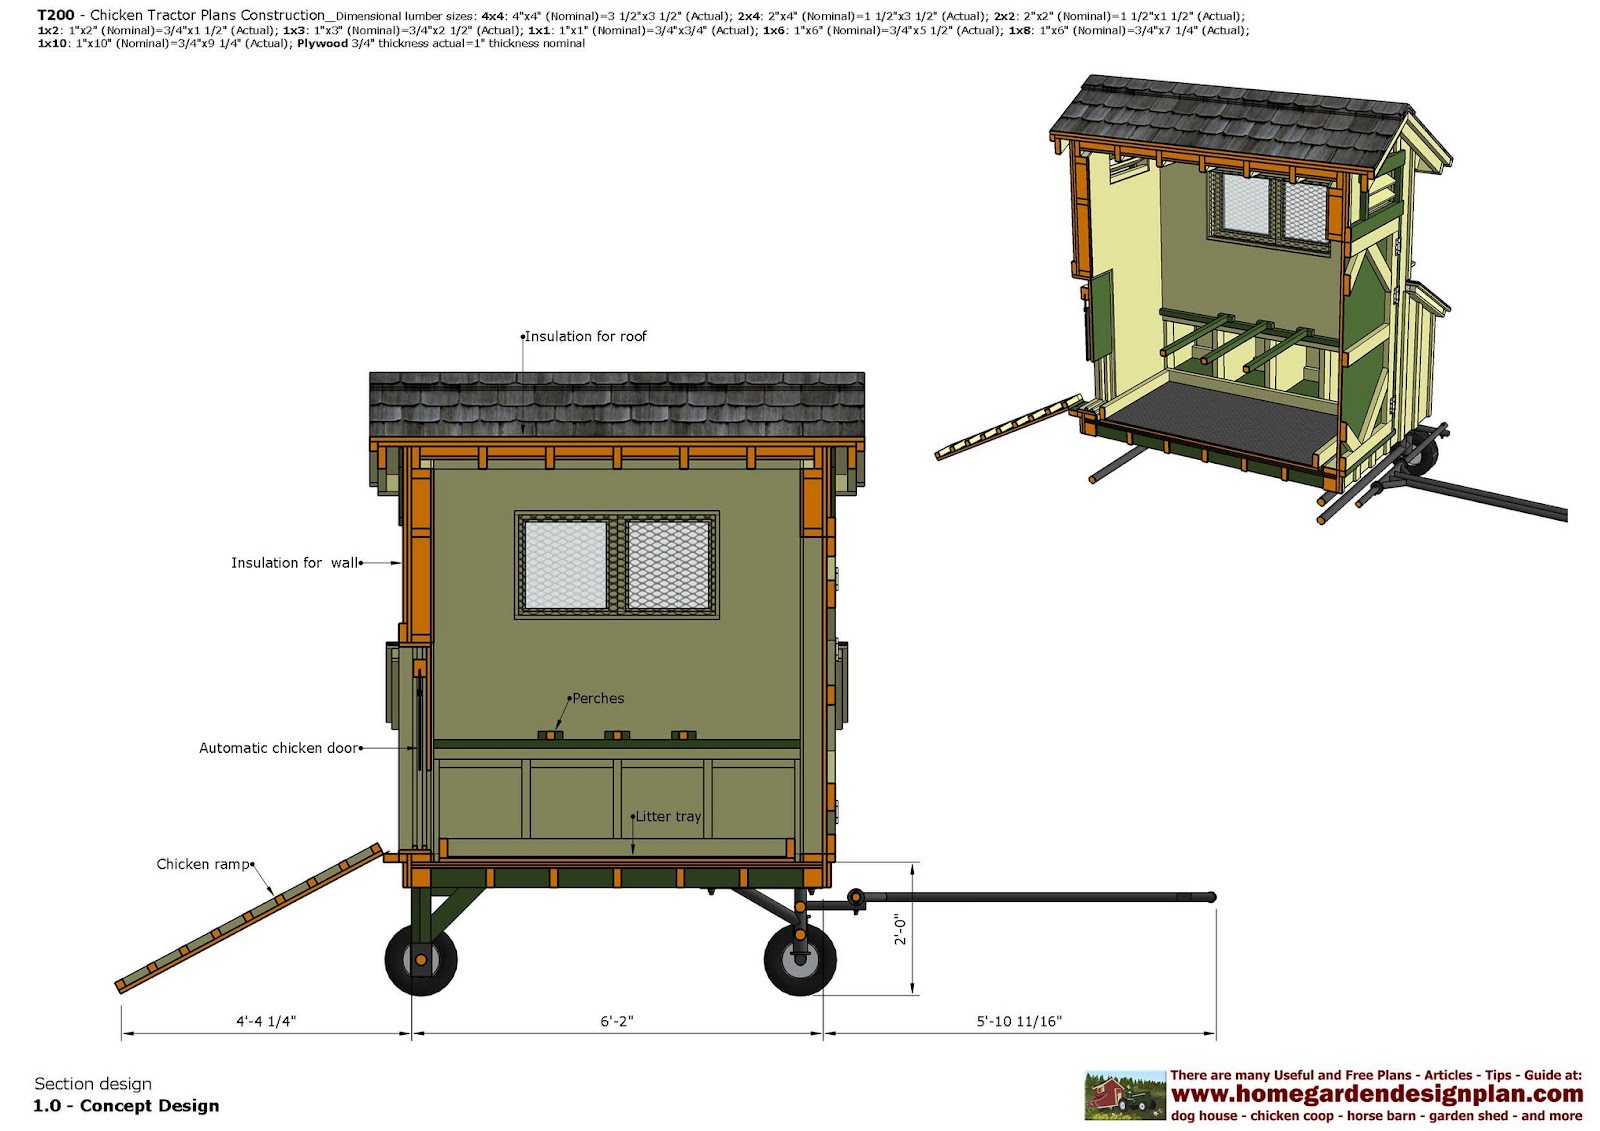 ... : T200 - Chicken Tractor Plans Construction - Chicken Trailer Plans